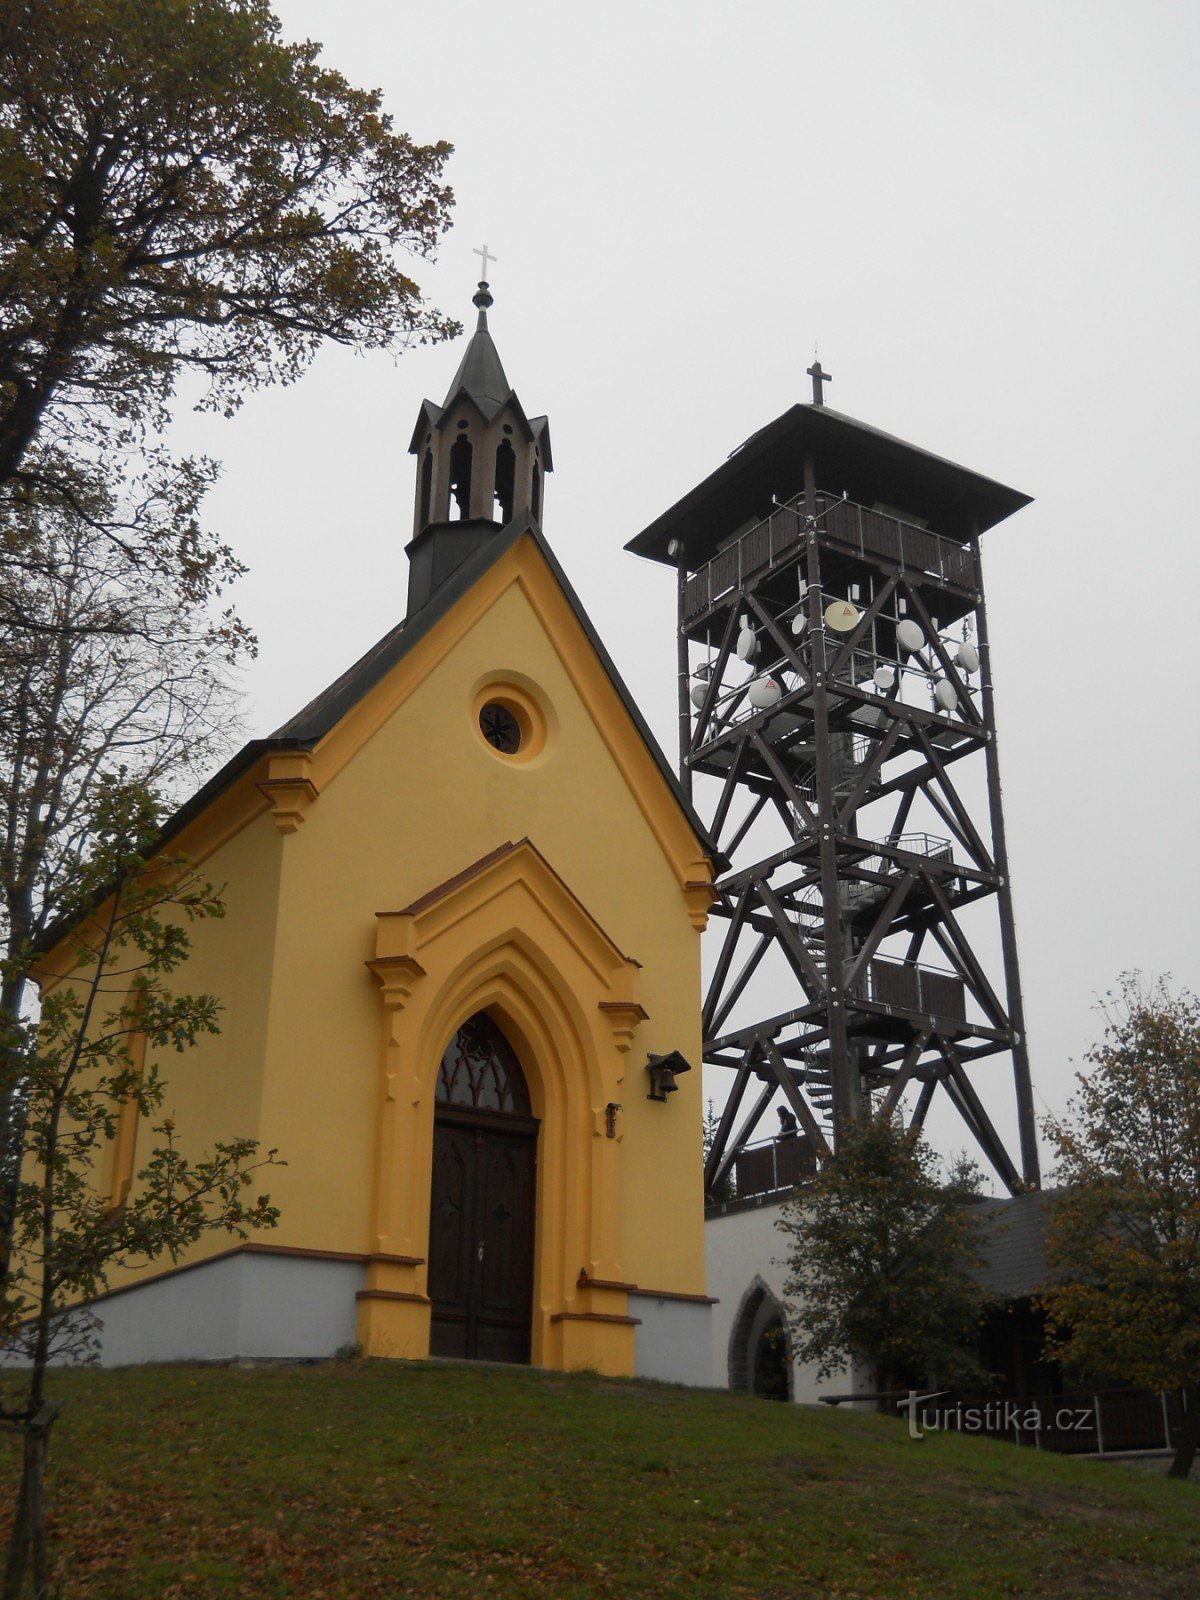 Dlažov - Torre di avvistamento Markéta e cappella di S. Margherita